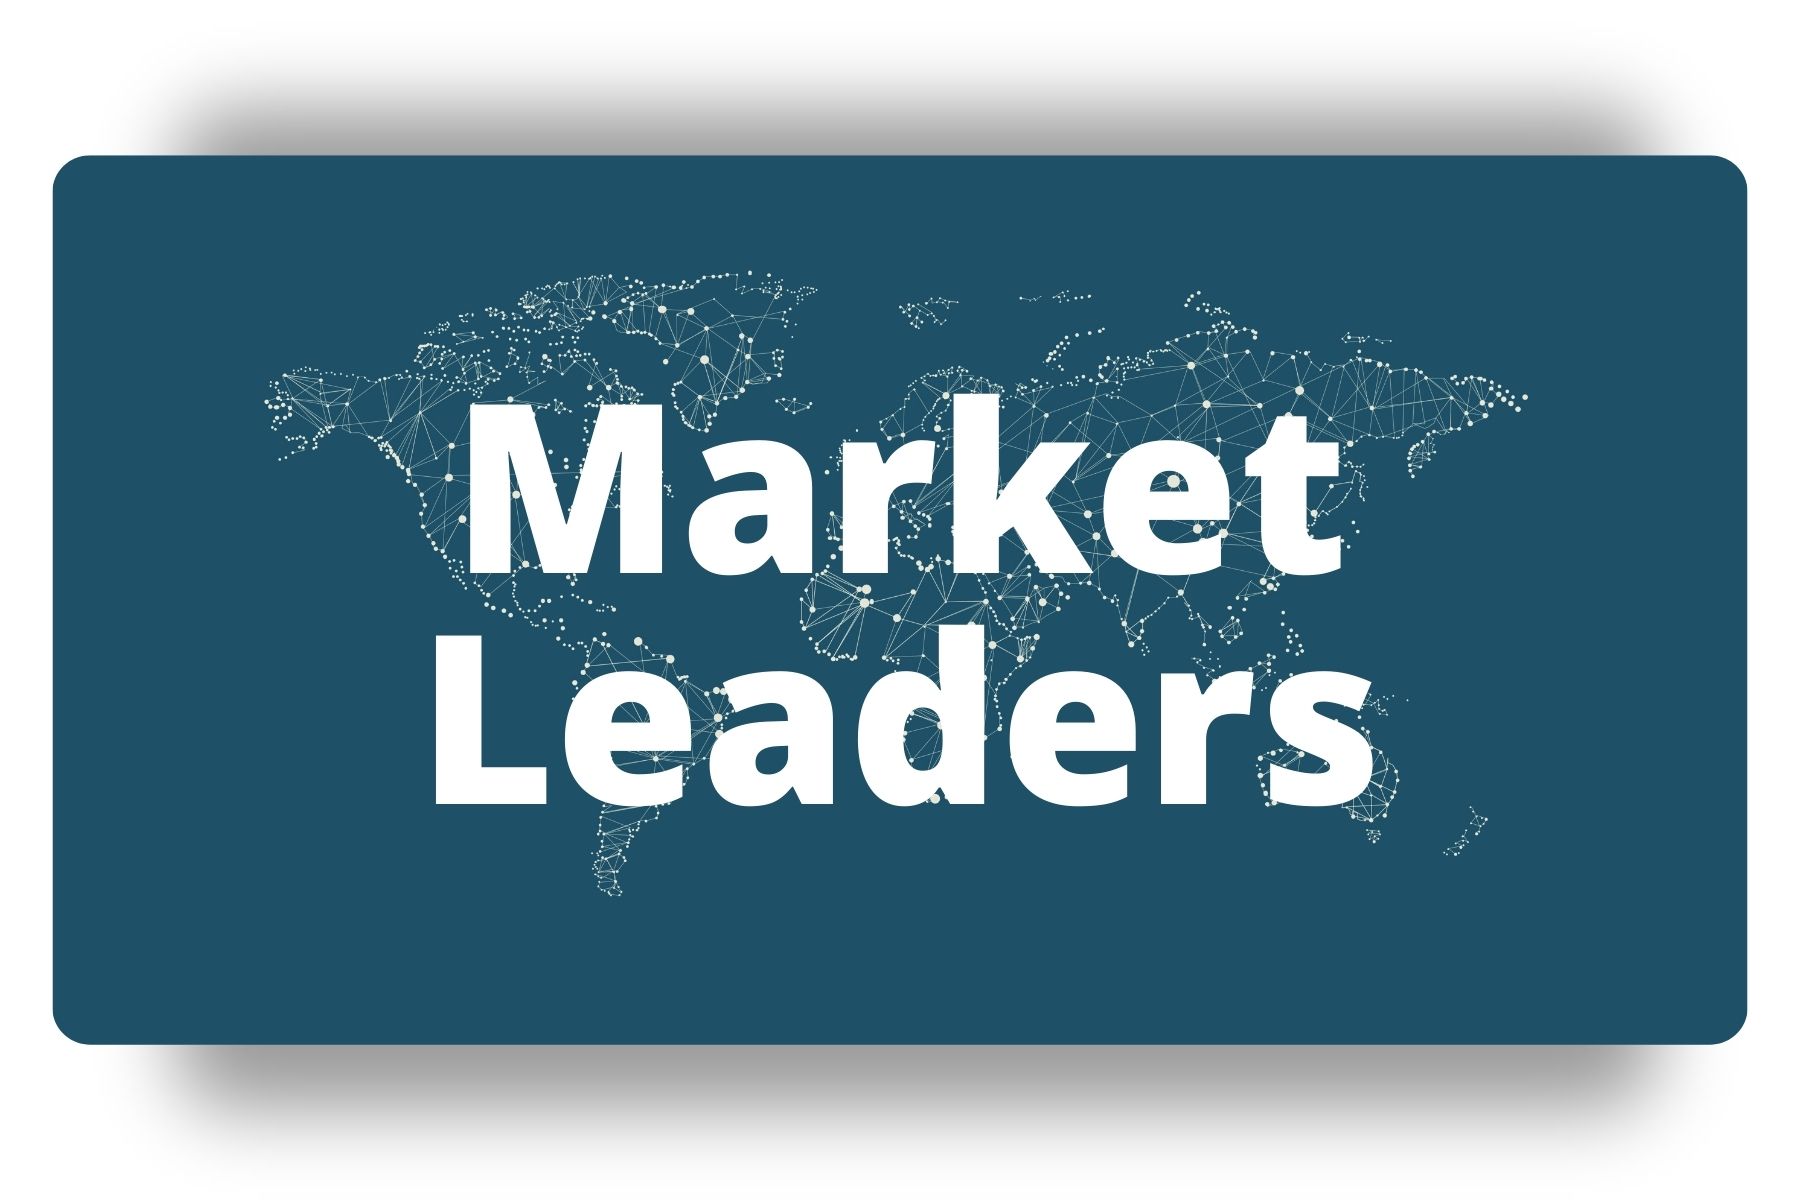 DSMN8's Employee Activity Leaderboards - Market Leaders Hub Image